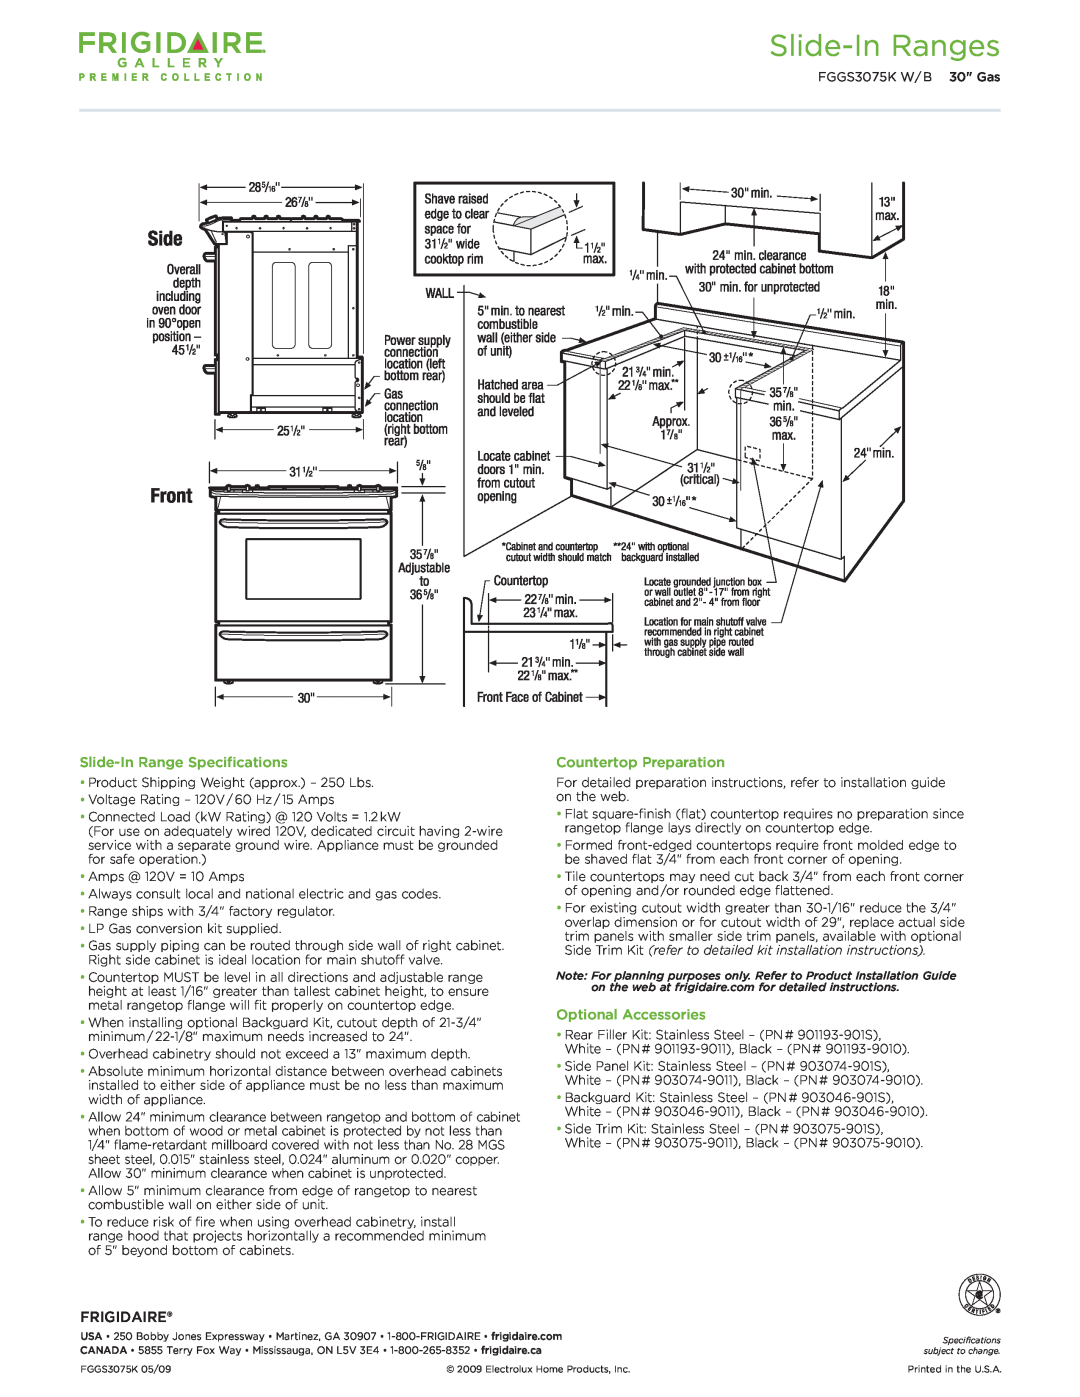 Frigidaire FGGS3075K W/B dimensions Slide-InRange Specifications, Countertop Preparation, Frigidaire, Optional Accessories 